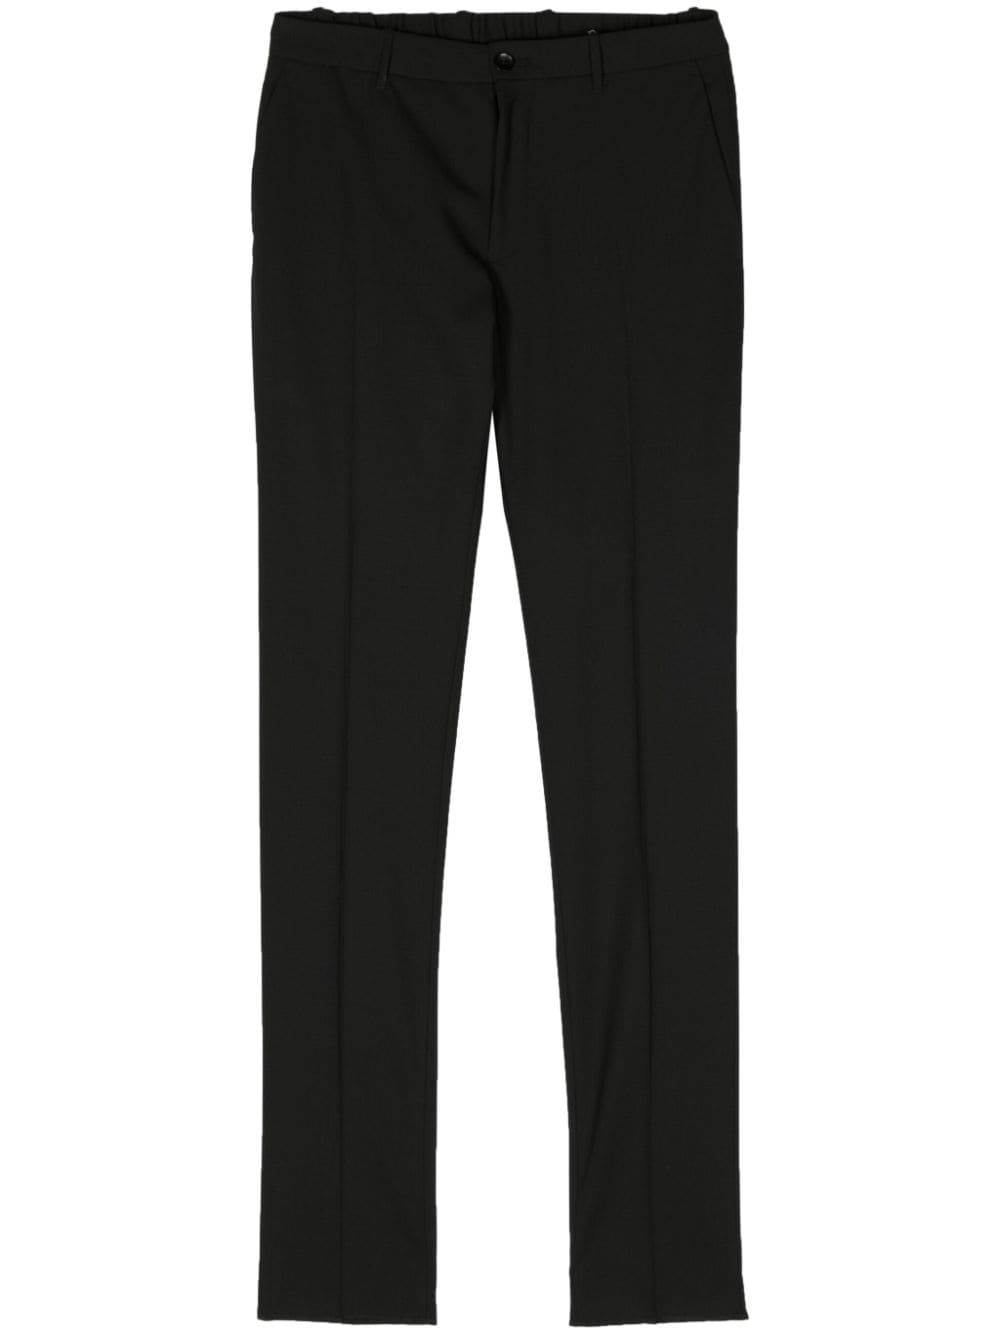 Incotex internal-drawstring tailored trousers - Black von Incotex